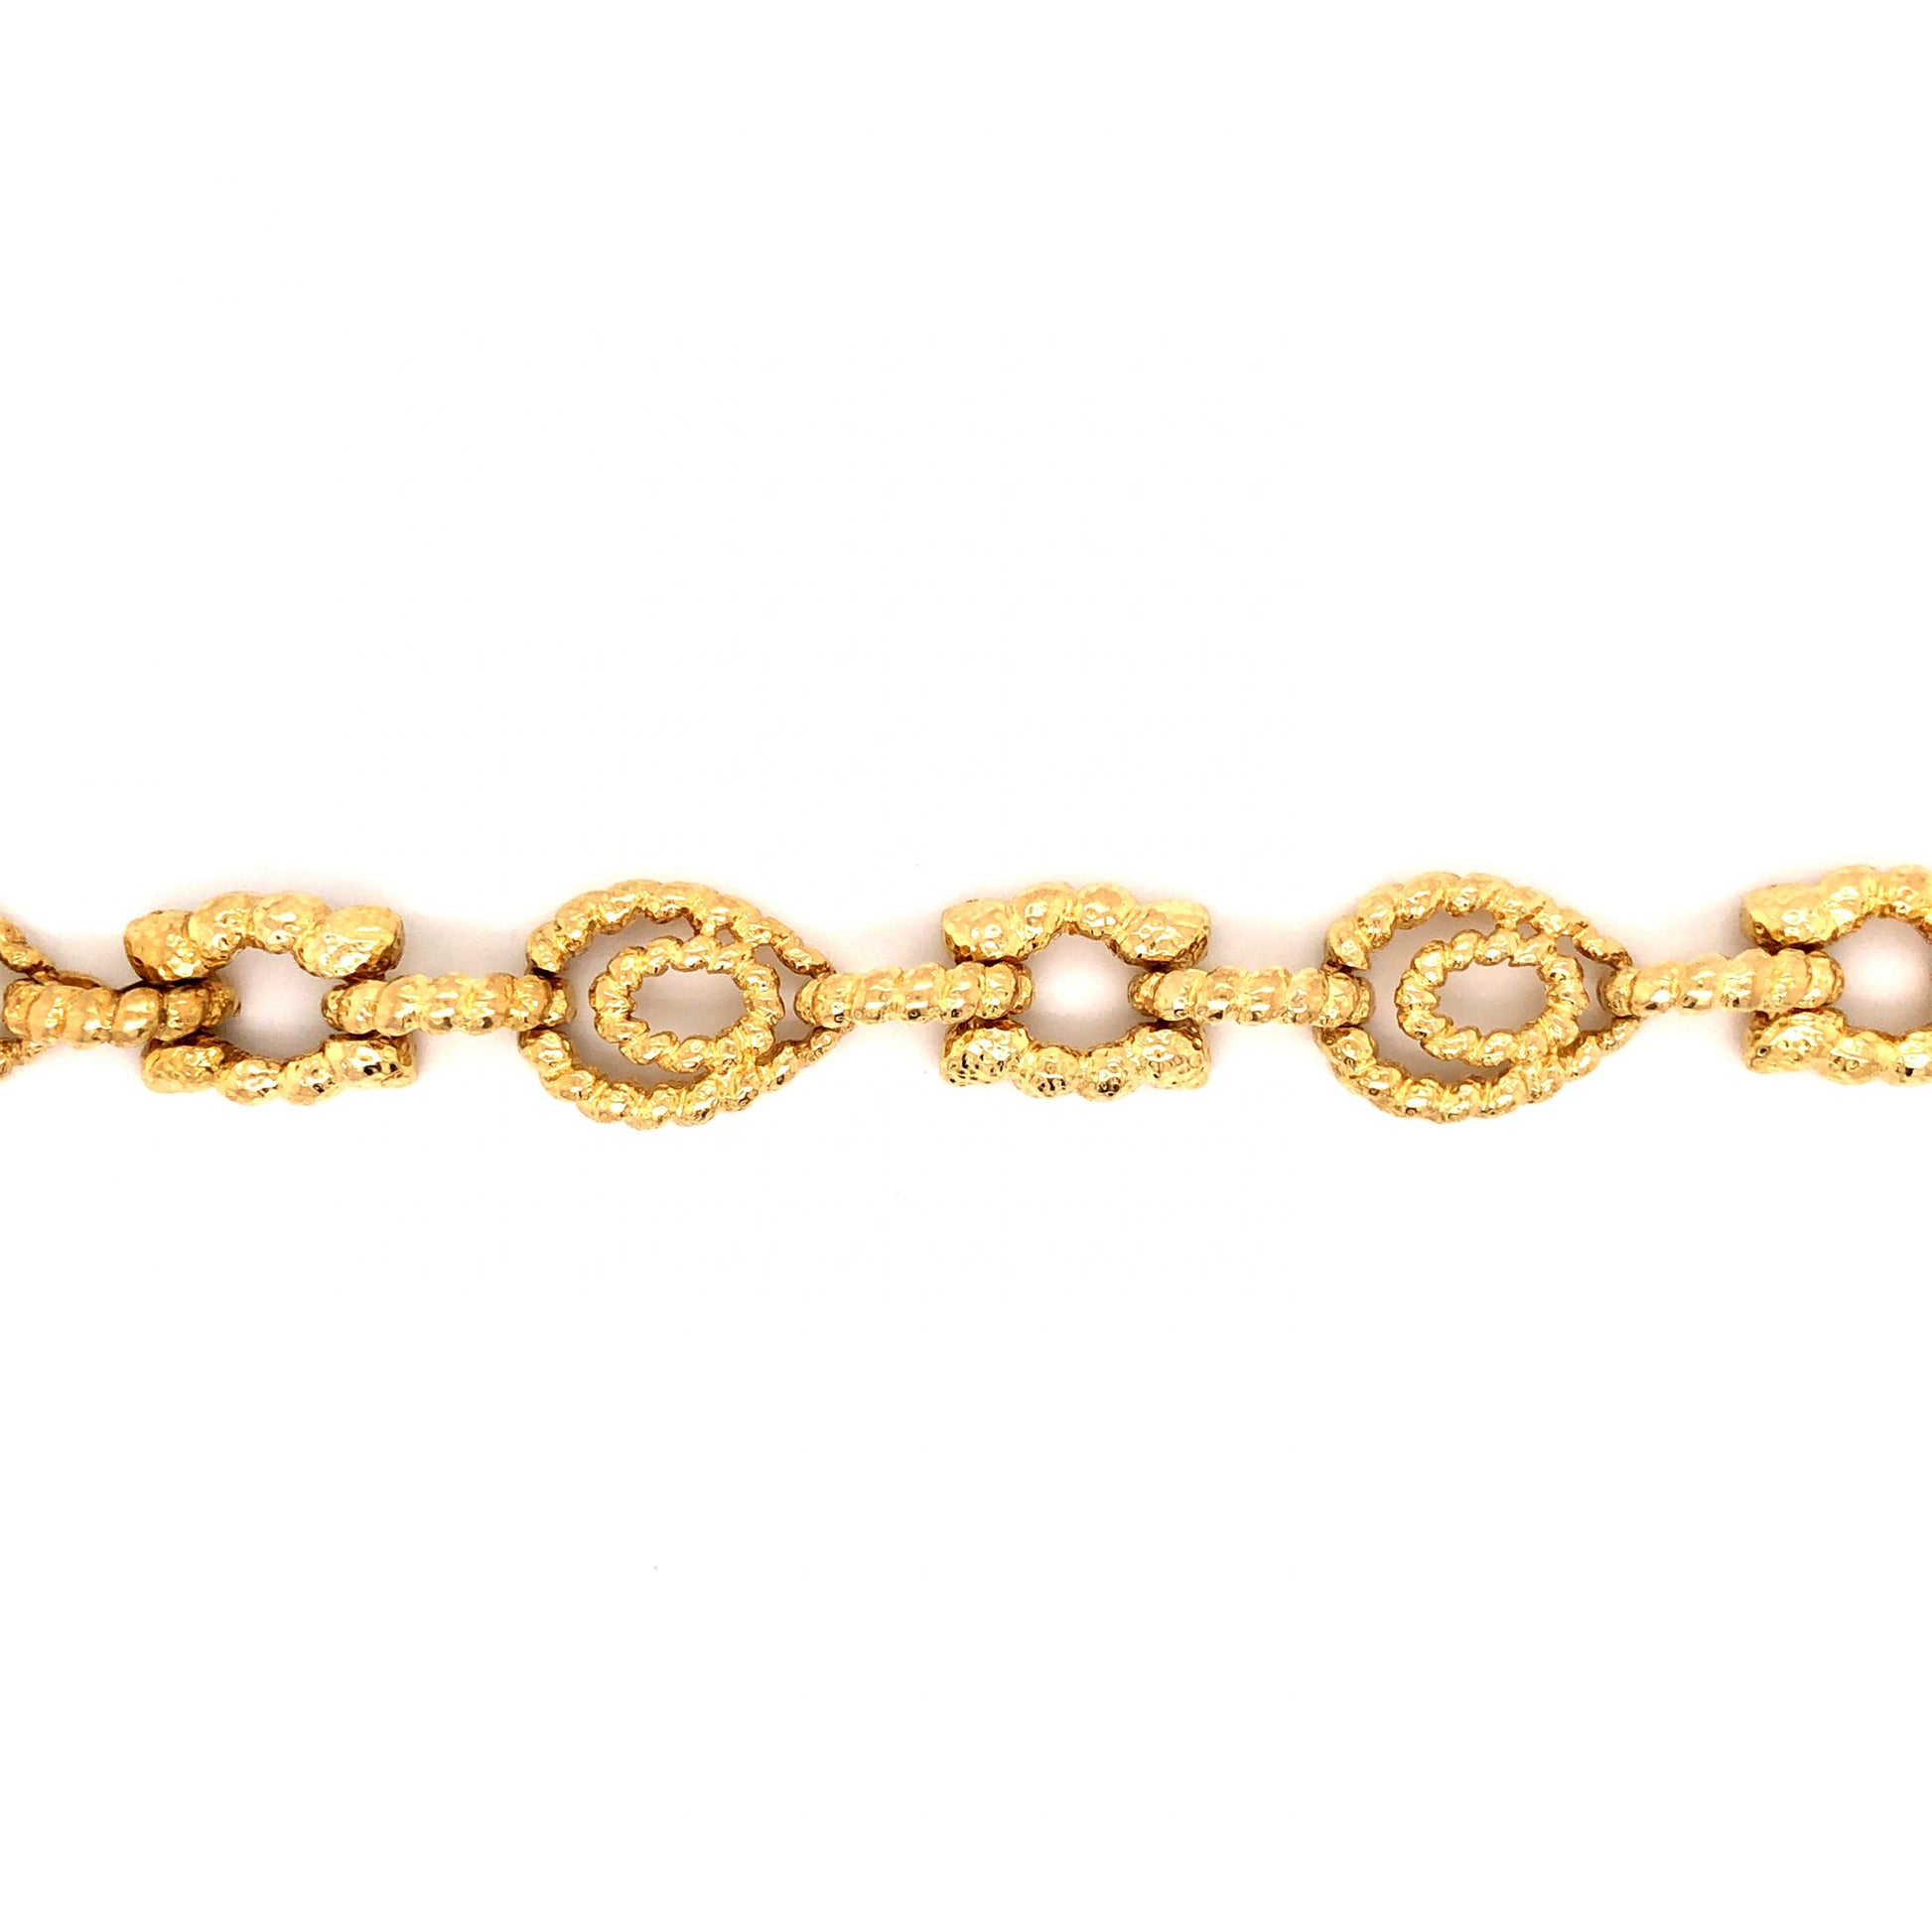 David Webb Link Bracelet in 18k Yellow GoldComposition: 18 Karat Yellow Gold Total Gram Weight: 28.3 g Inscription: WEBB, 18K
      